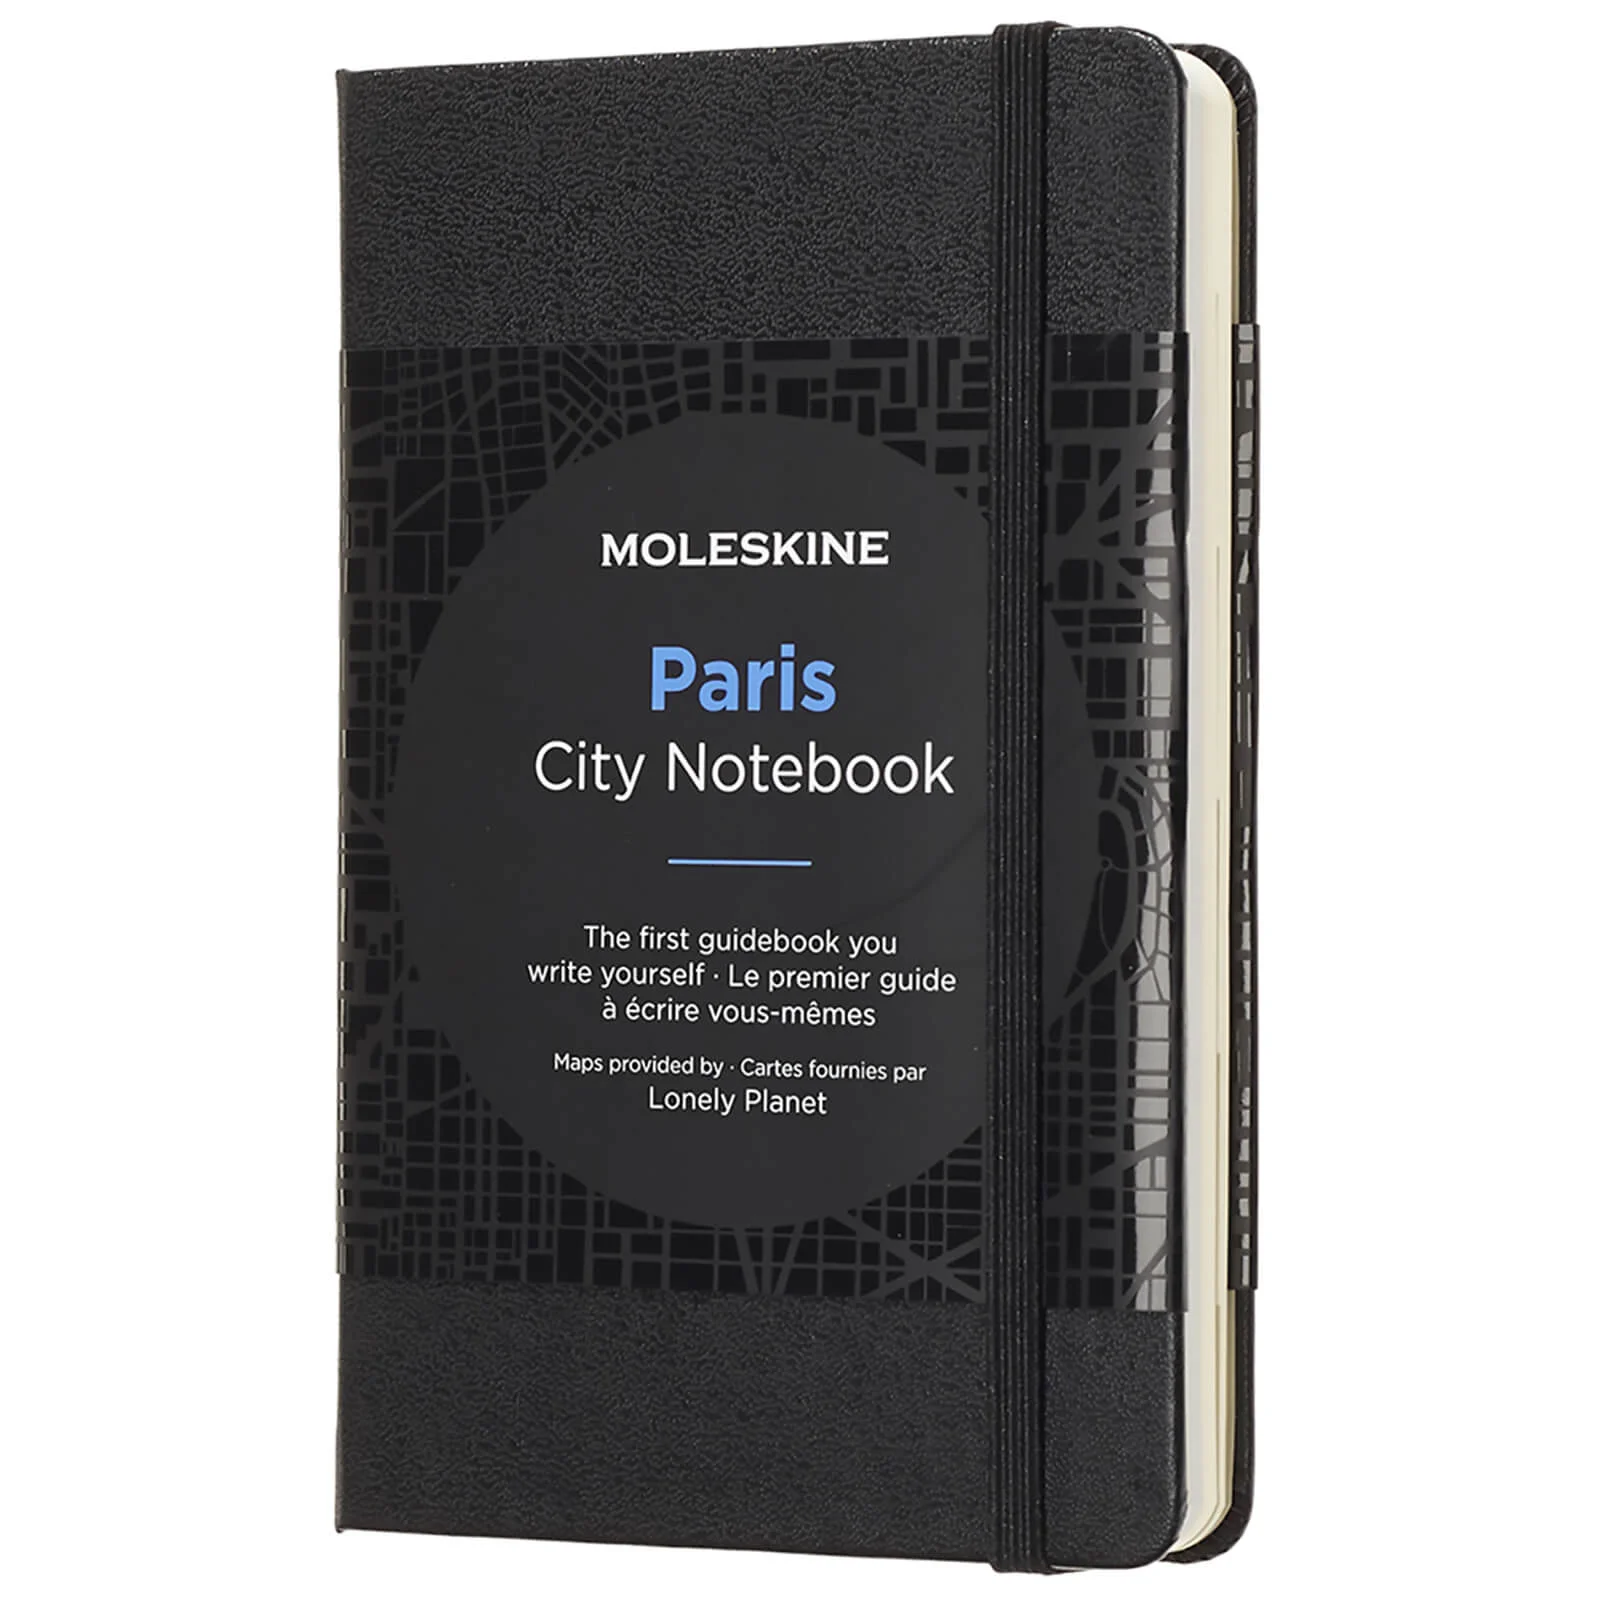 Moleskine City Notebook - Paris Image 1